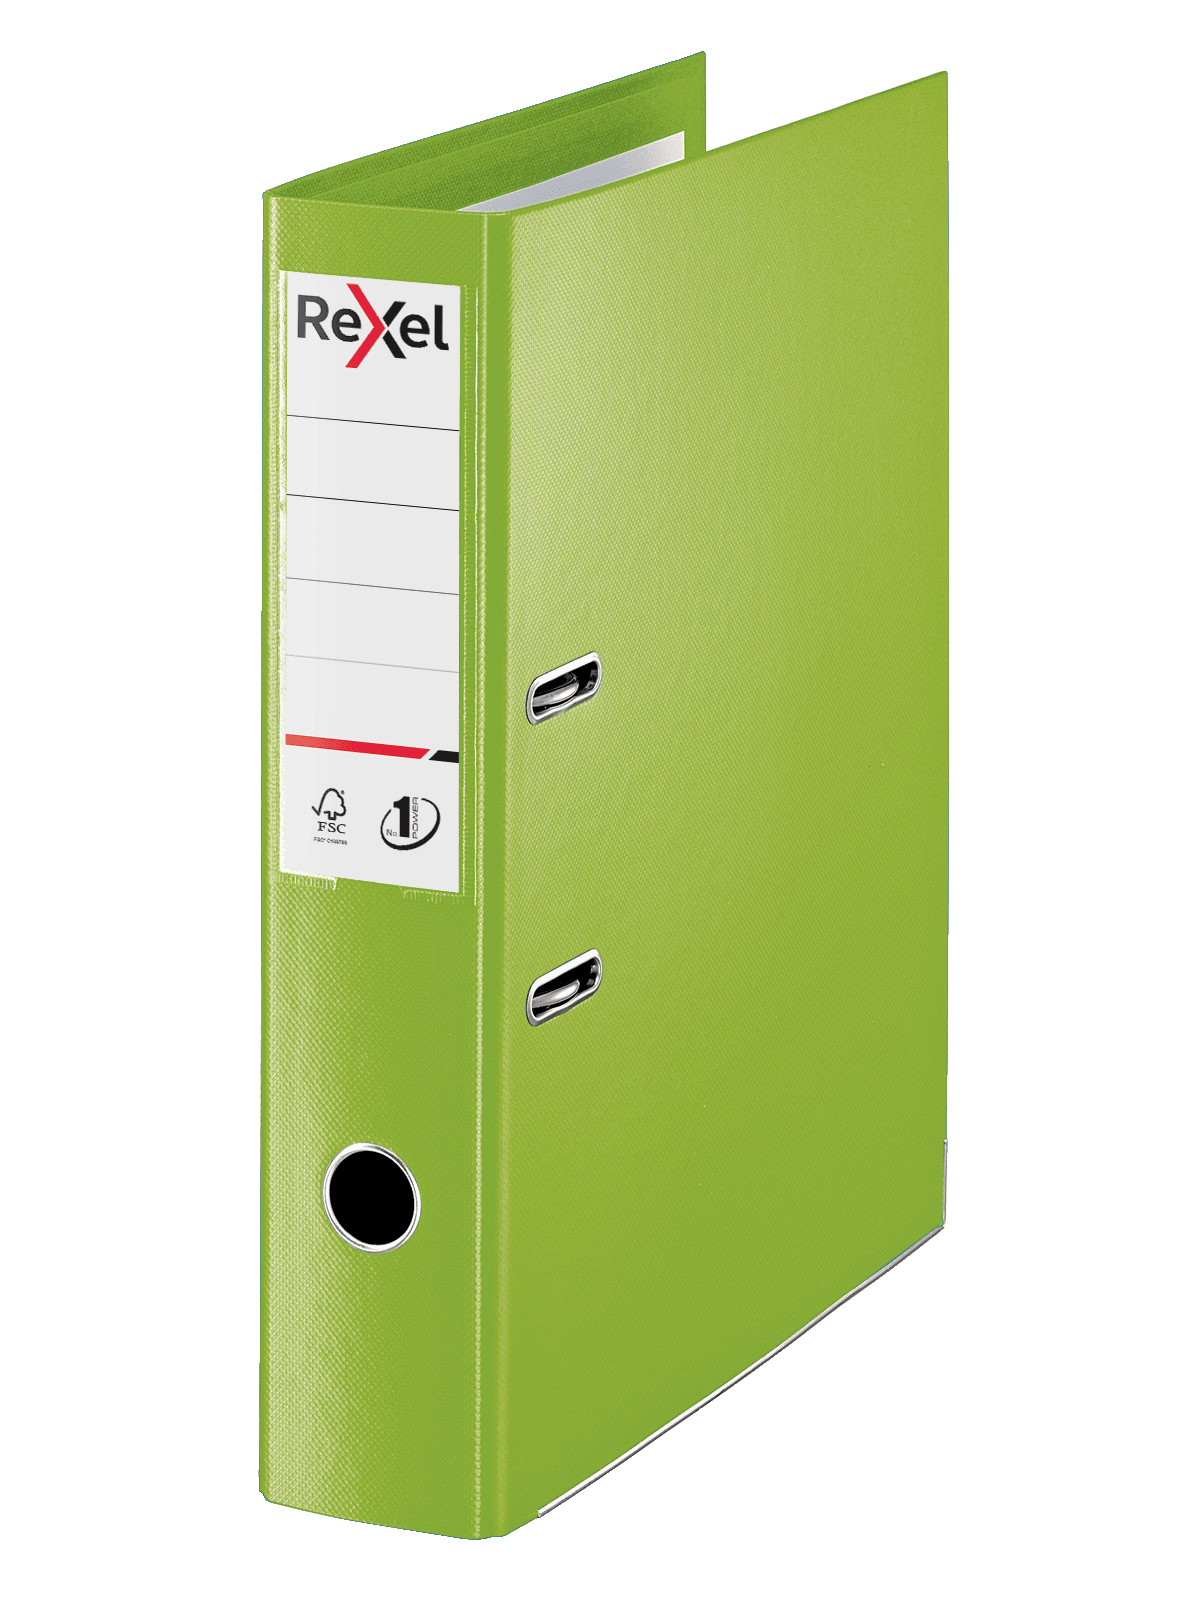 Rexel Choices 75mm Lever Arch File Polypropylene Foolscap Green 2115514